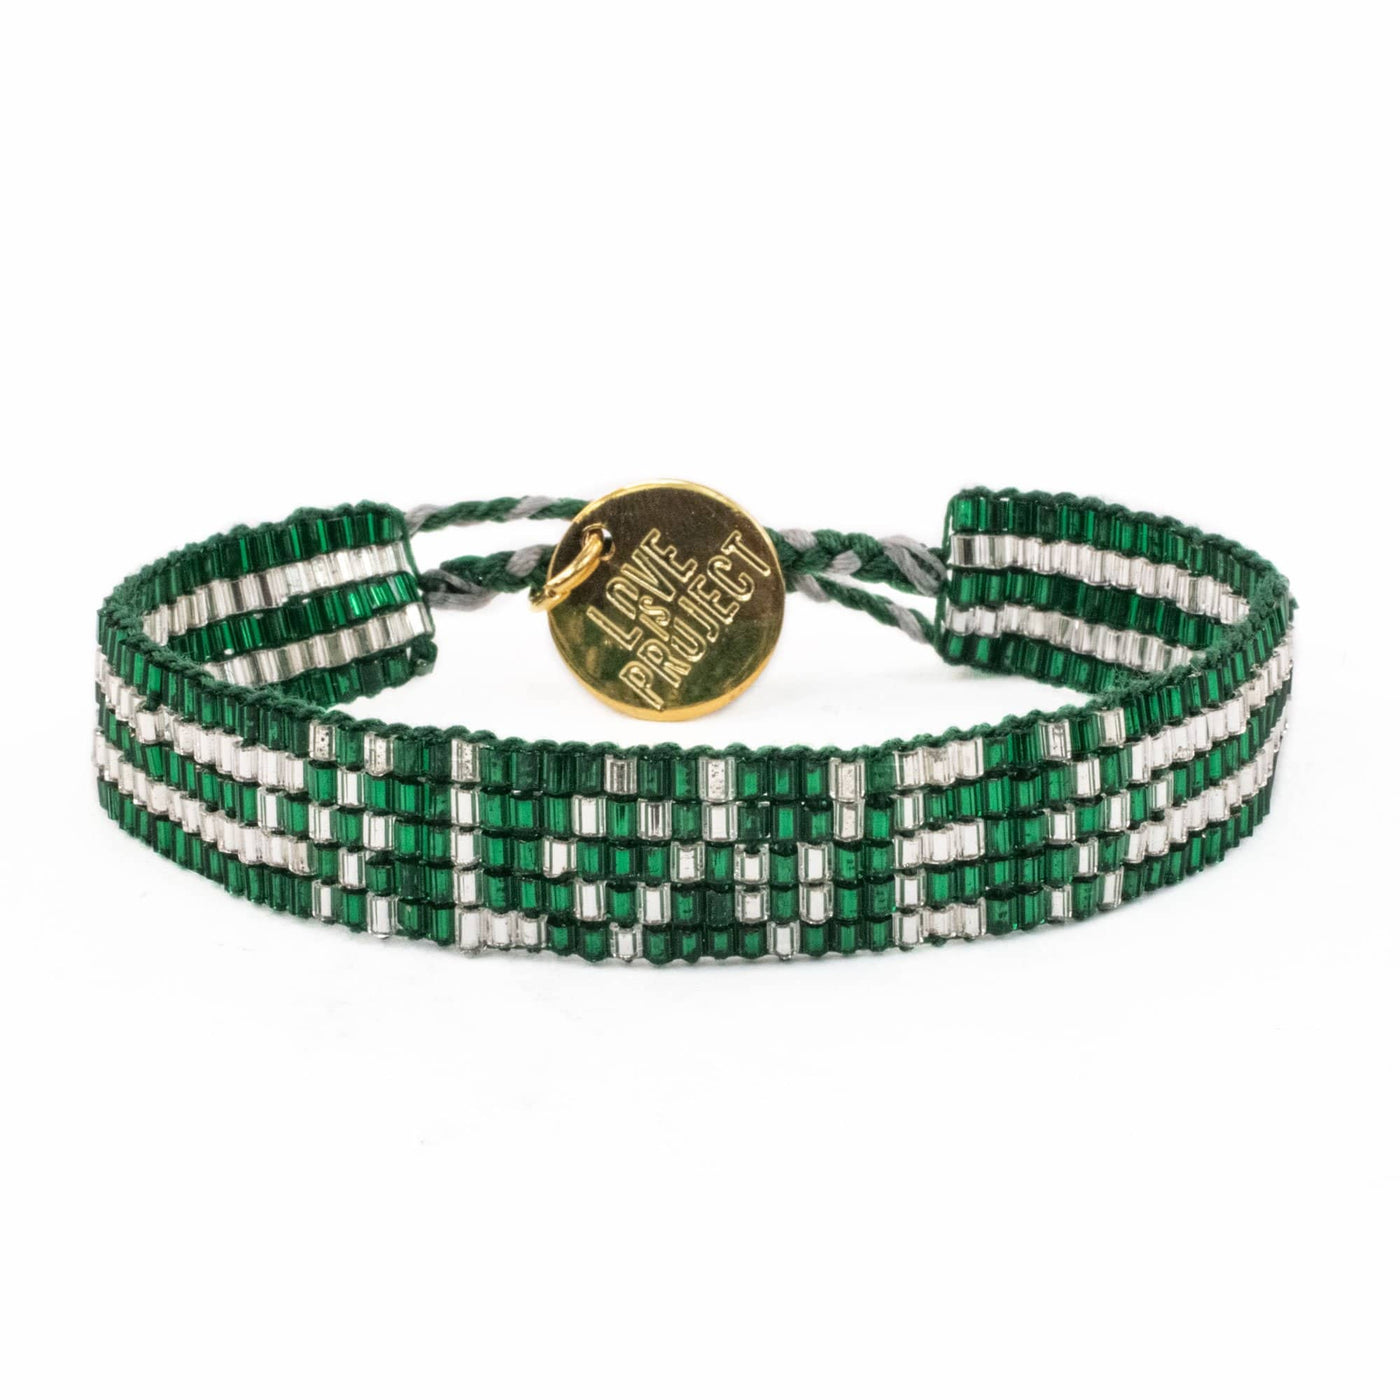 Custom Seed Bead LOVE Bracelet - Green